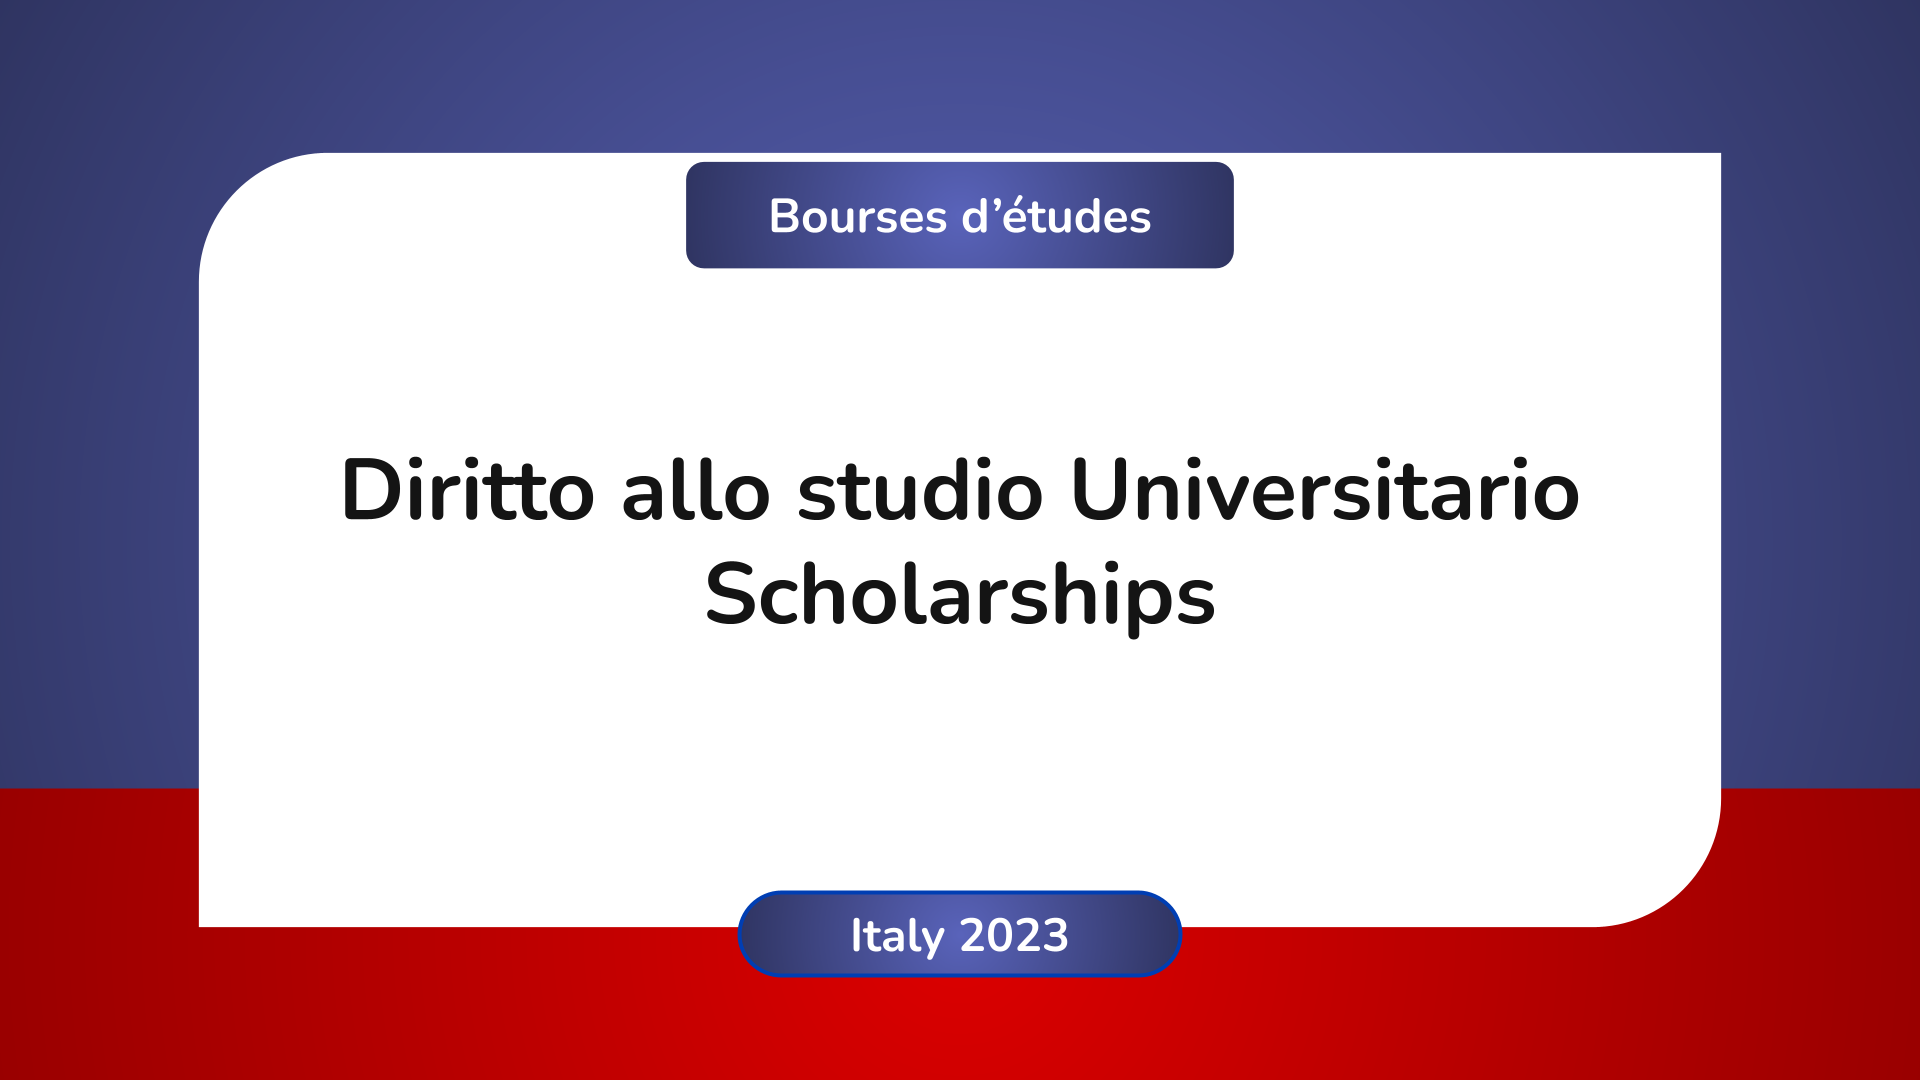 Diritto allo studio Universitario Scholarships in Italy in 2023